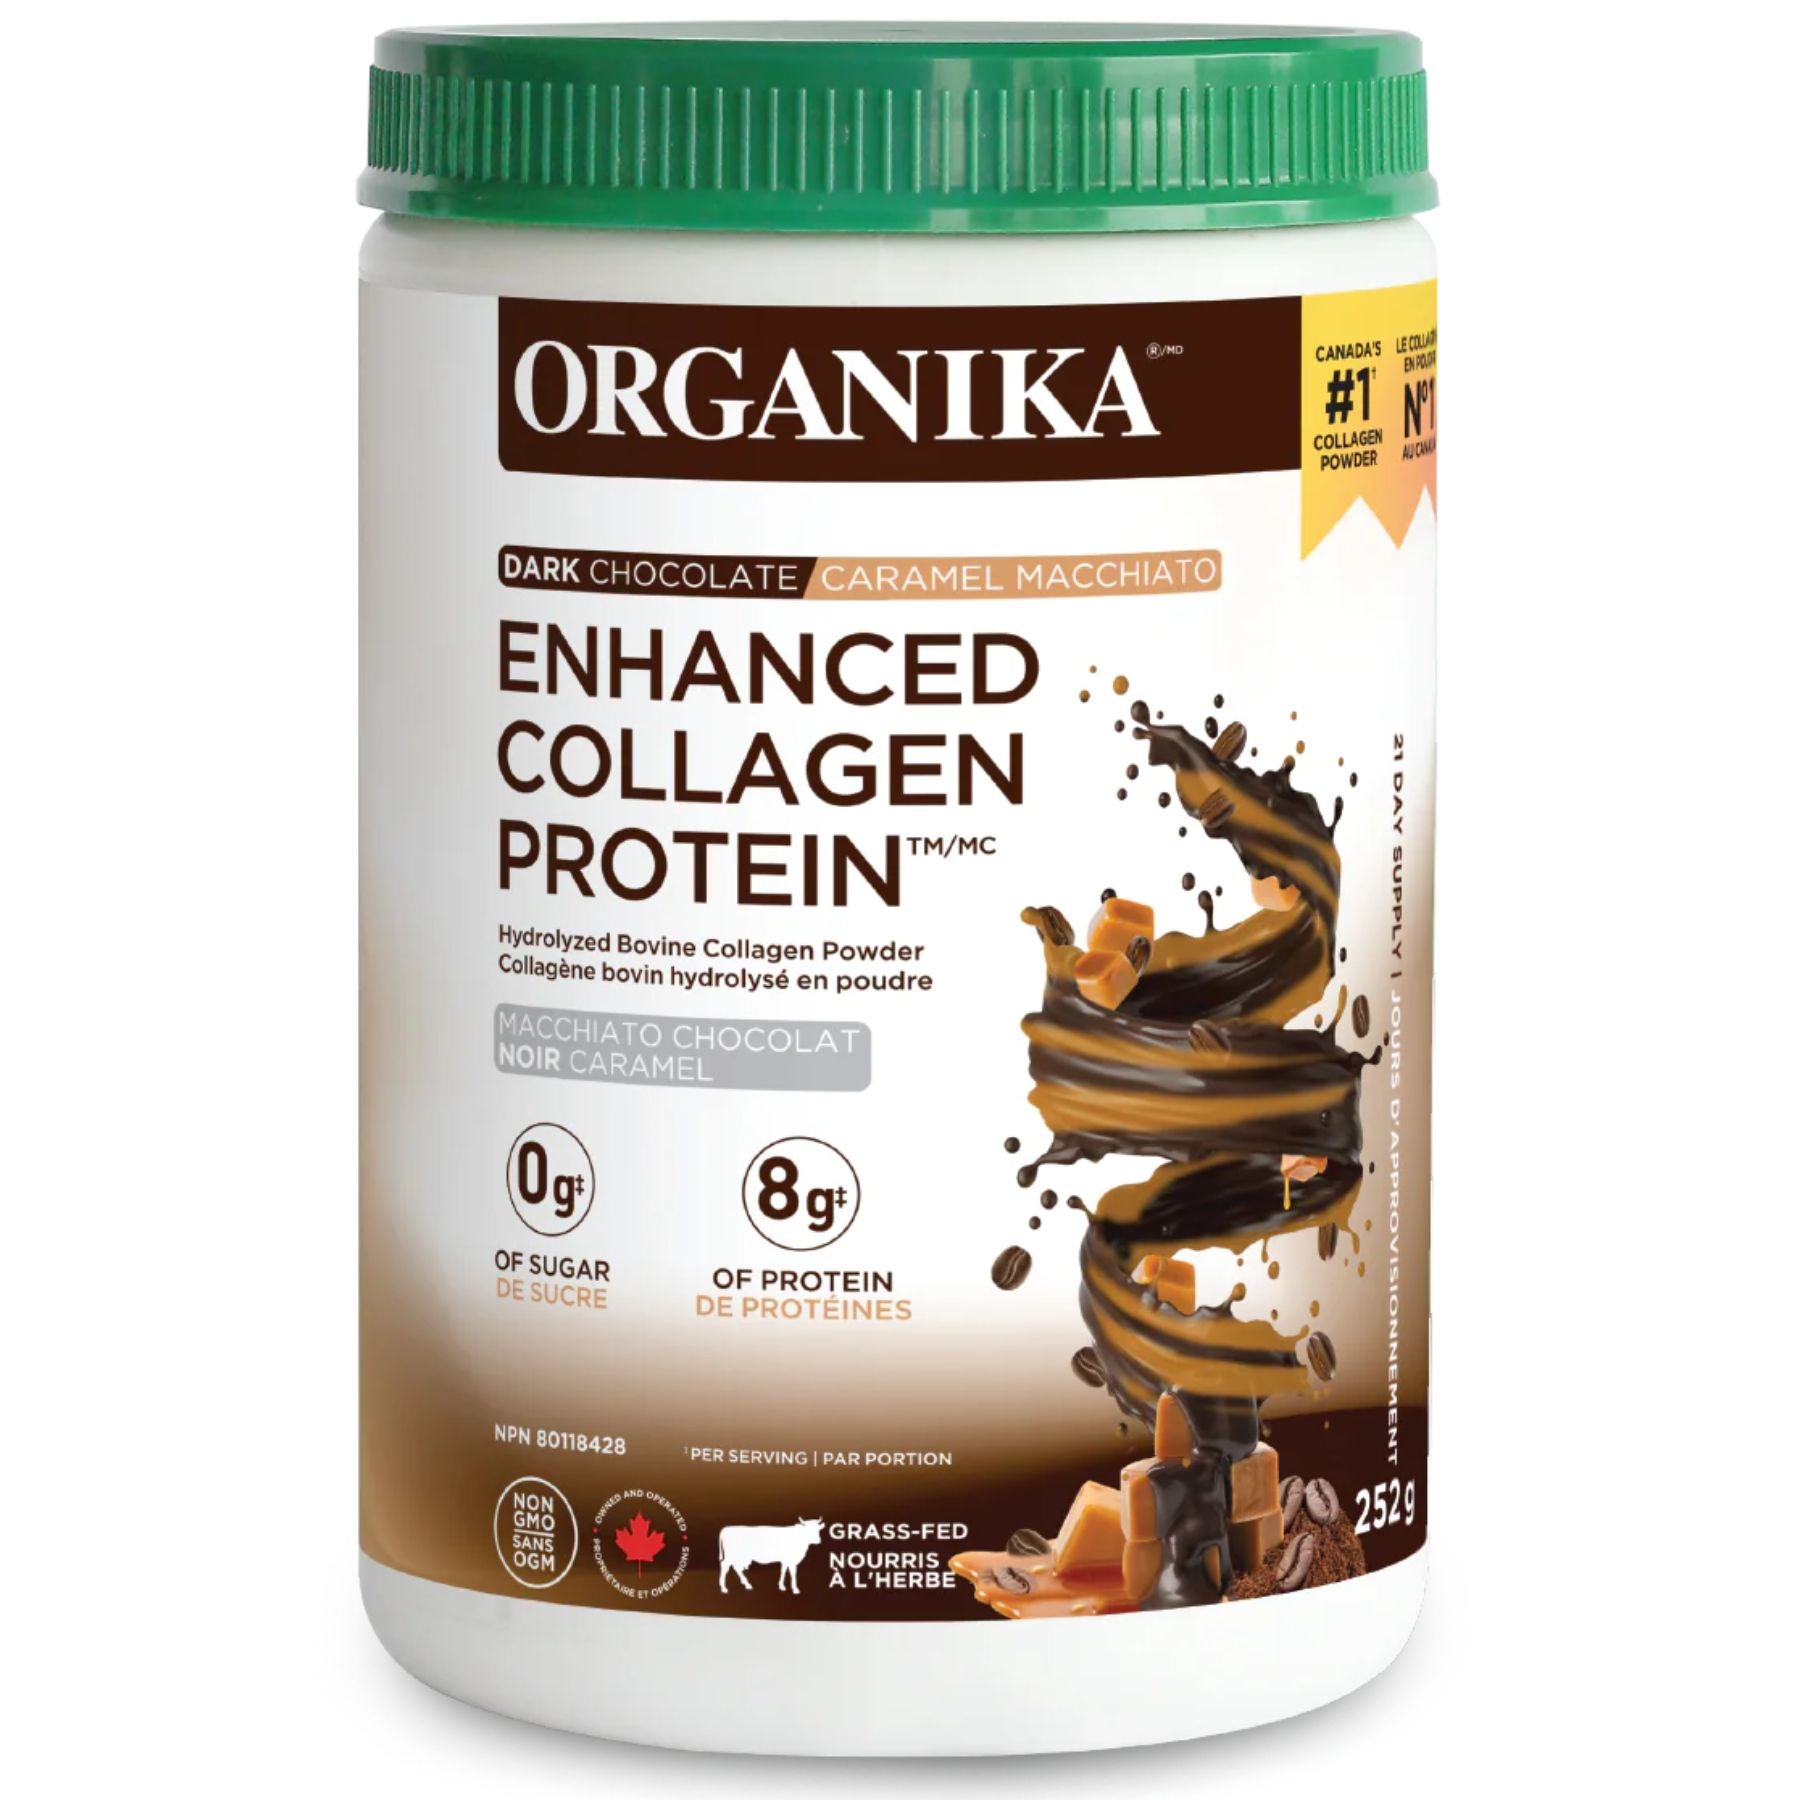 Organika Enhanced Collagen Protein - Dark Chocolate Caramel Macchiato 252g